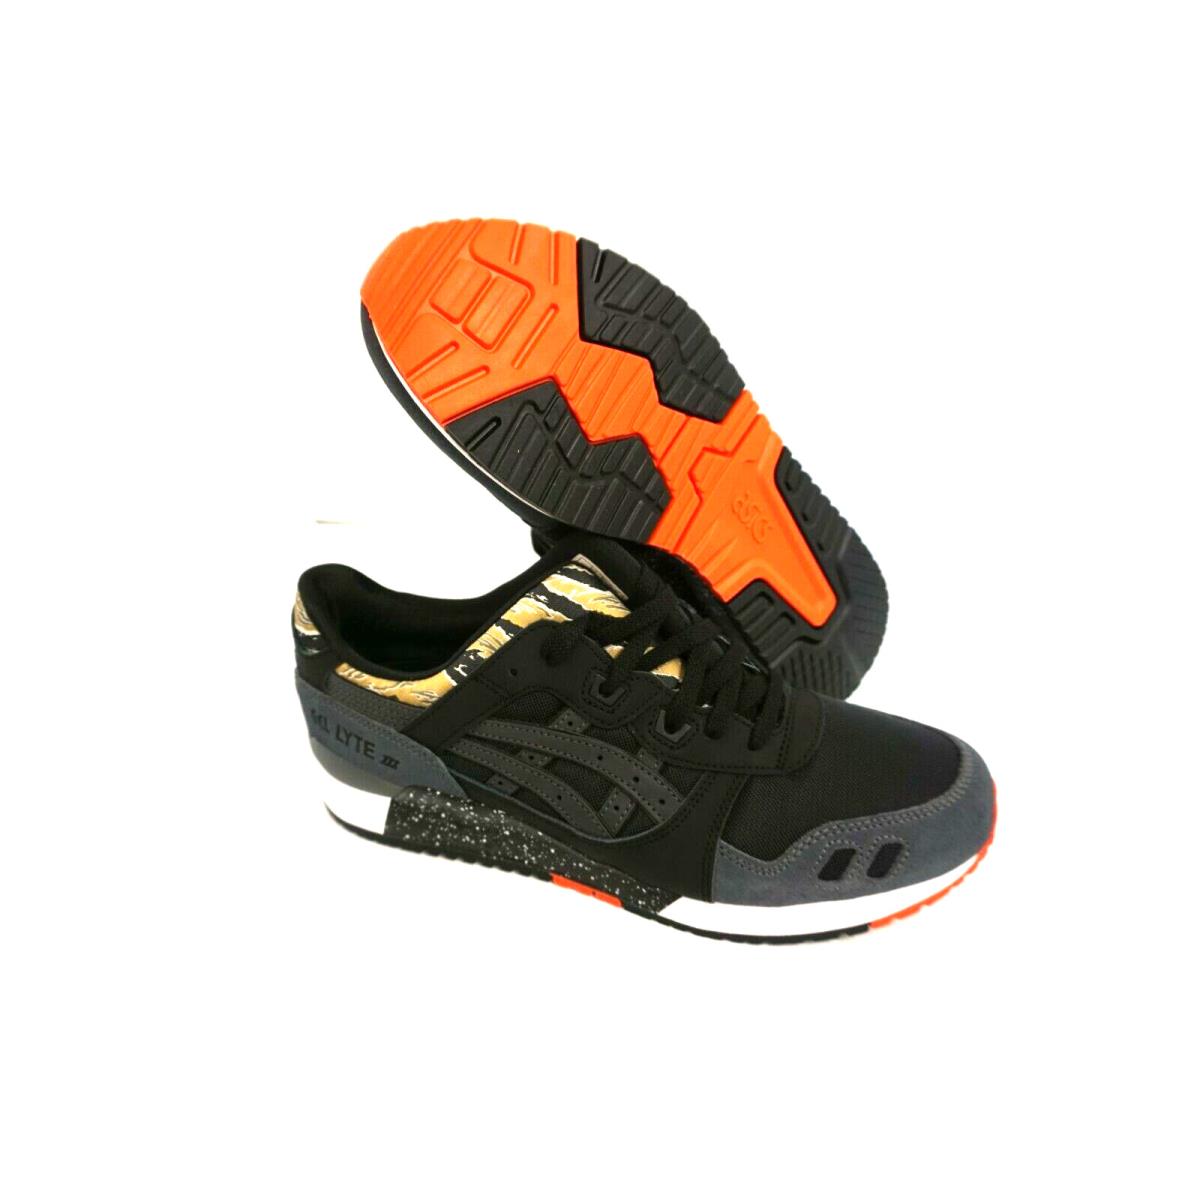 Asics Mens Gel Lyte Iii Running Shoes Tiger Black Orange Size 10.5 us